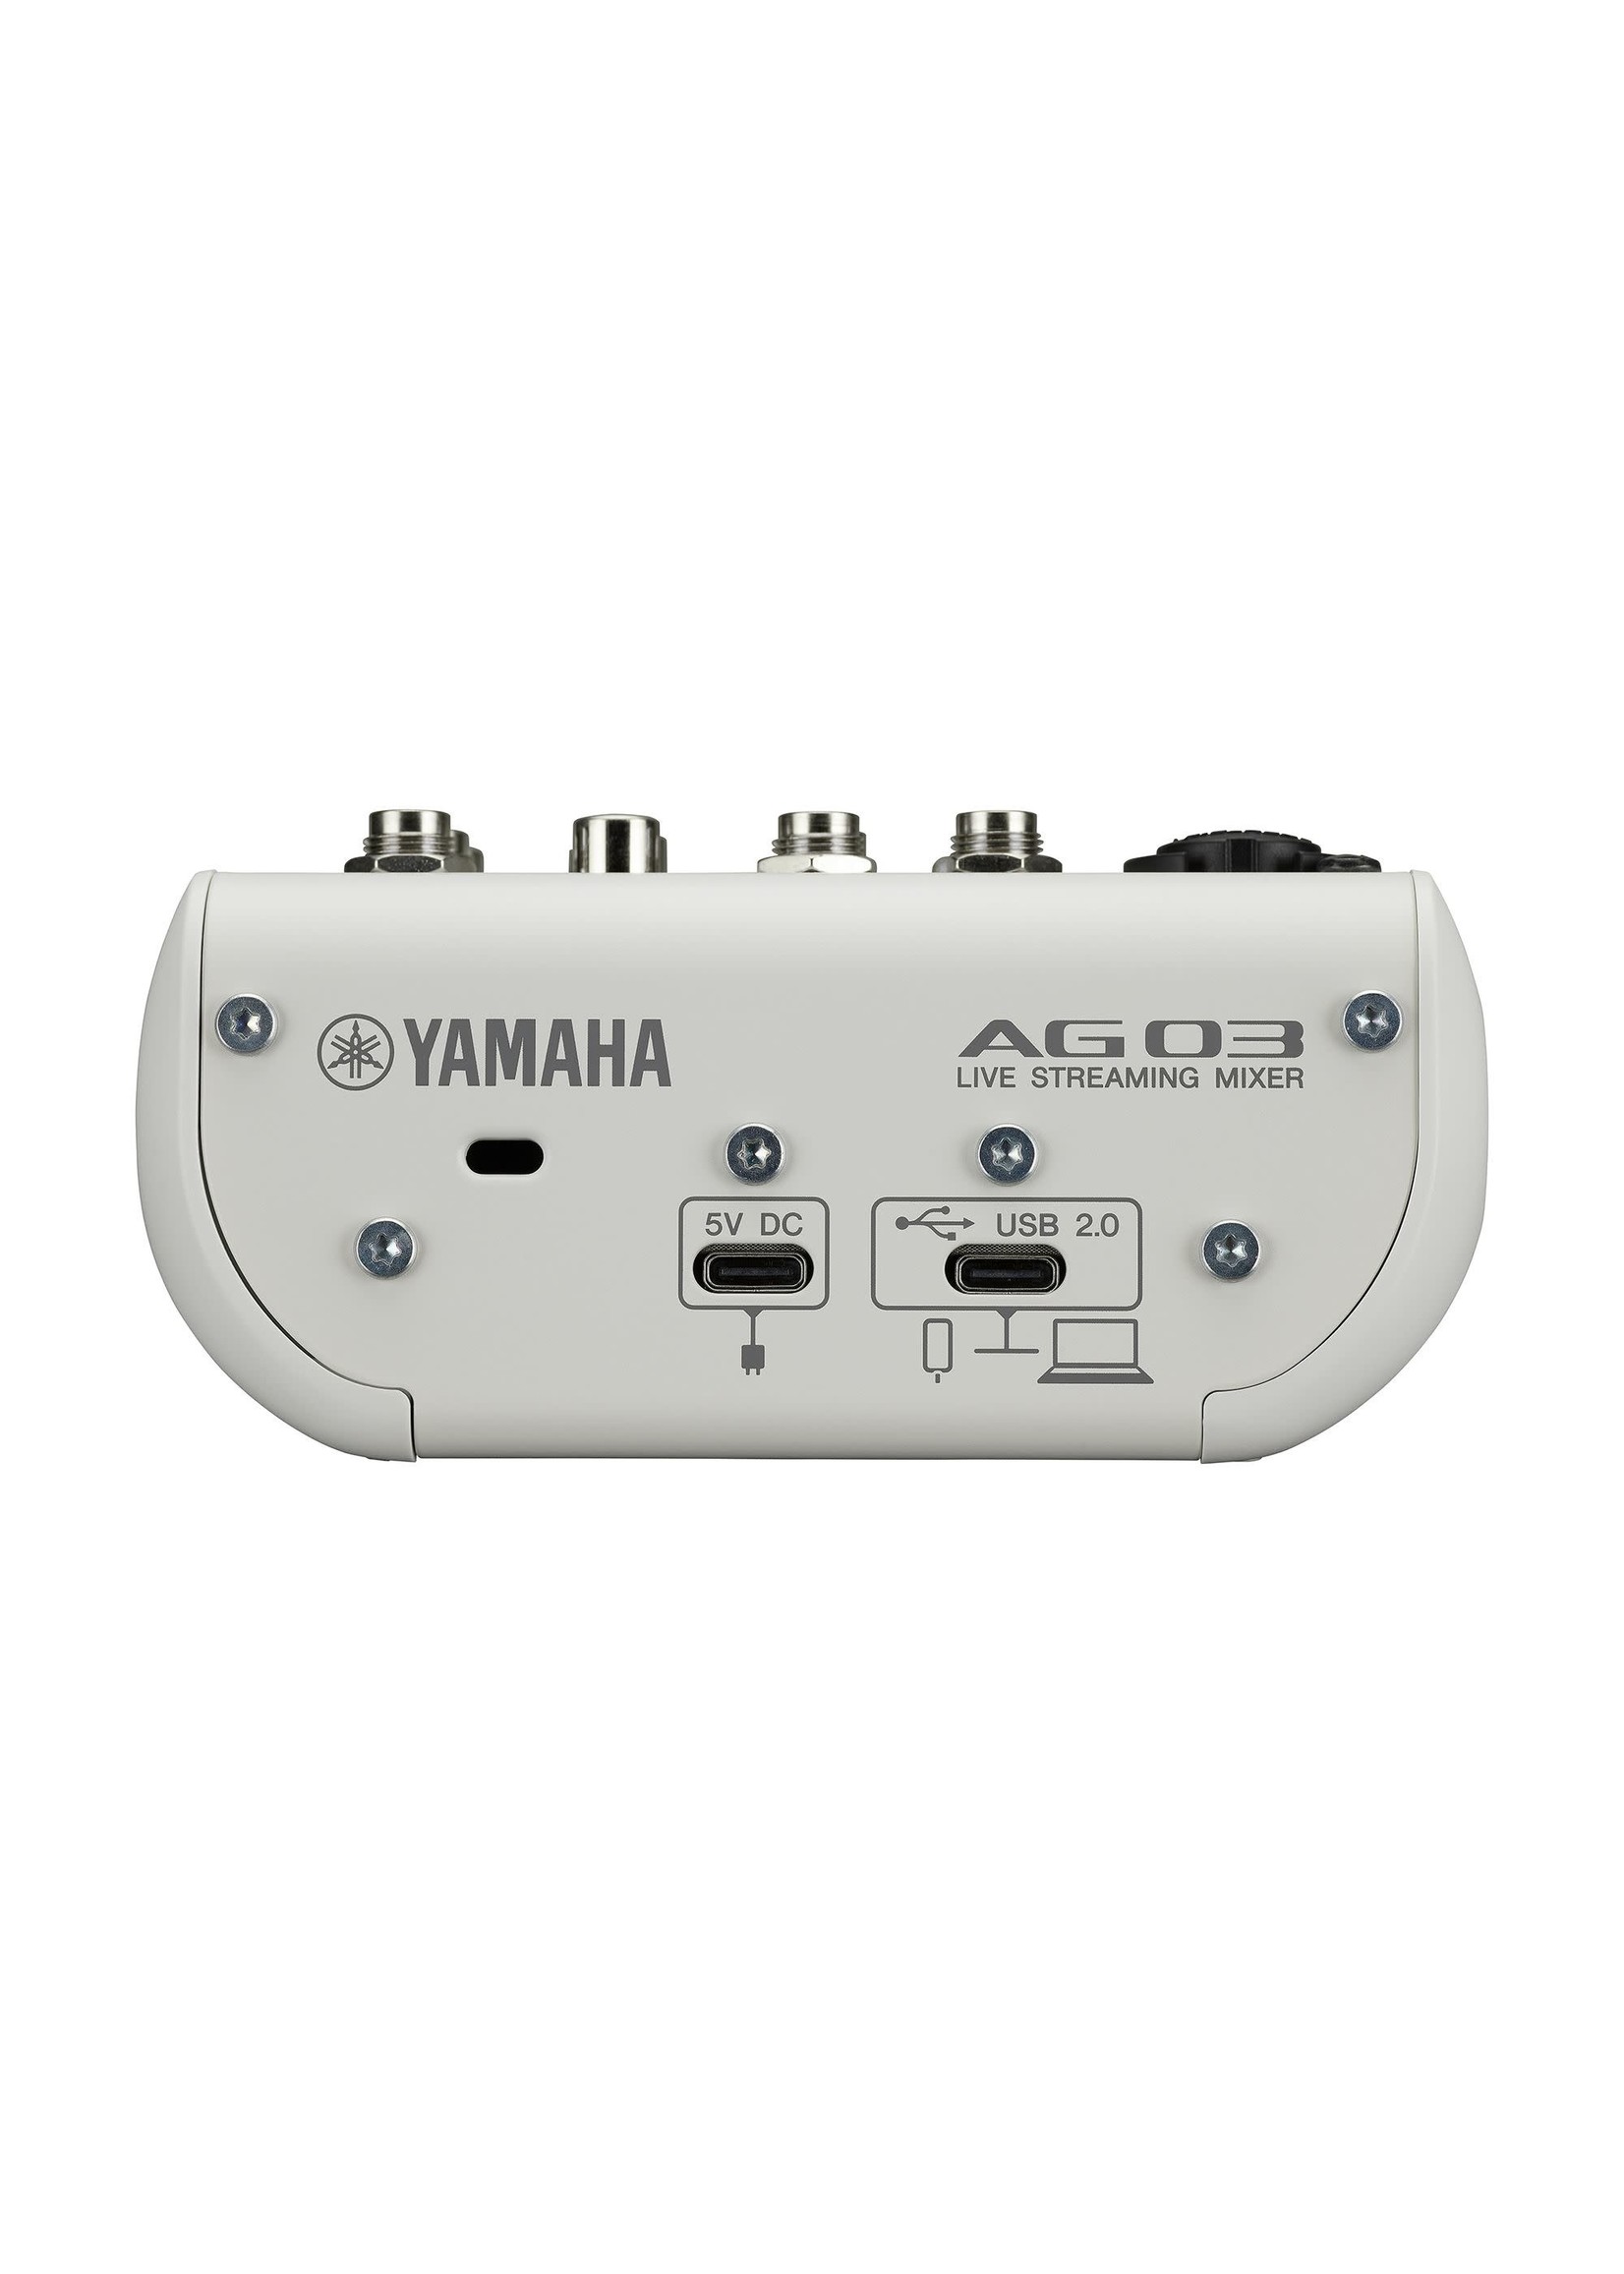 Yamaha Live Streaming Mixer AGMK2 White   Amadeus Music